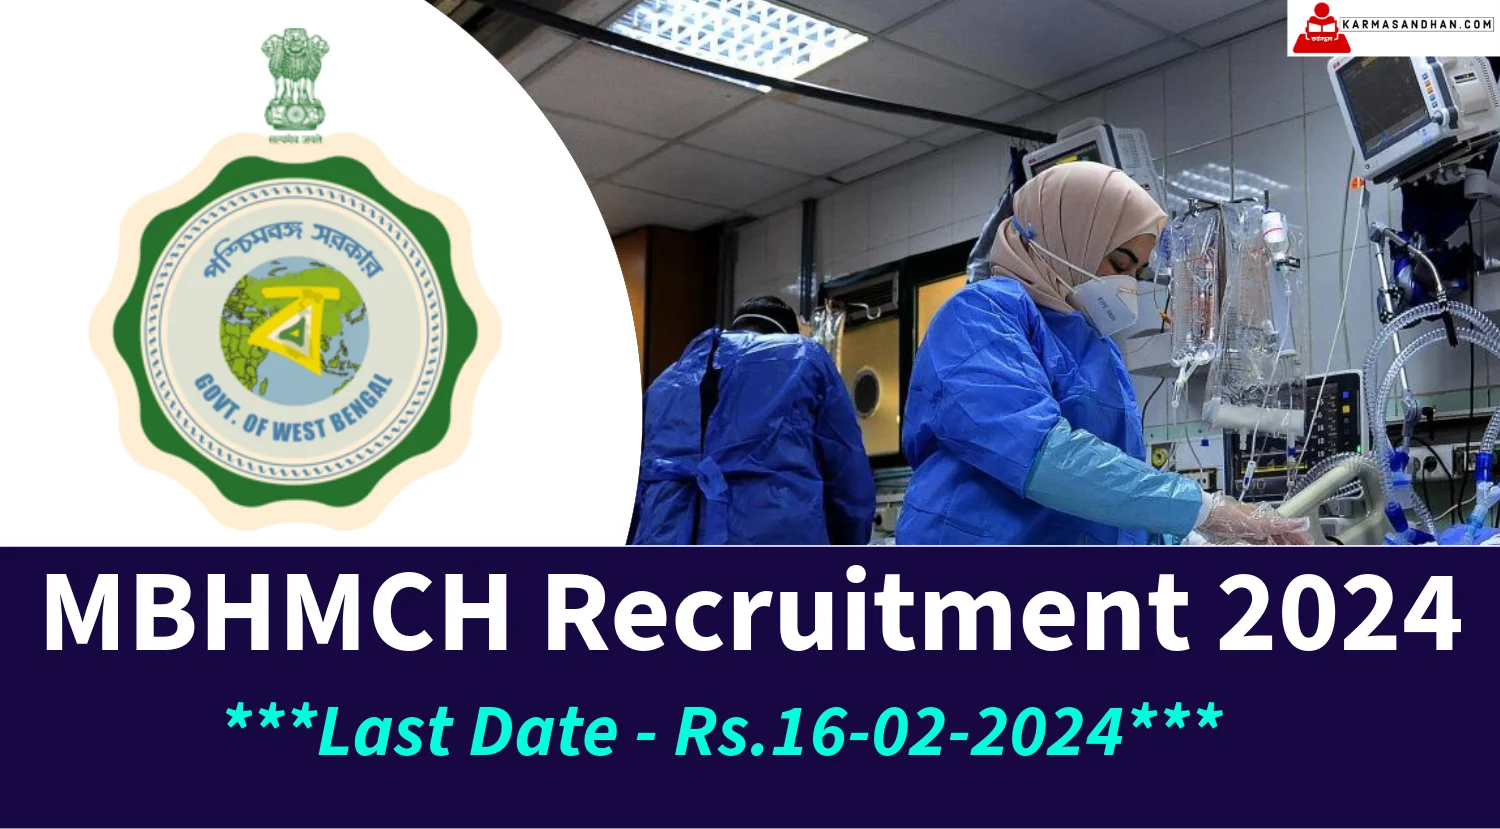 MBHMCH Recruitment 2024